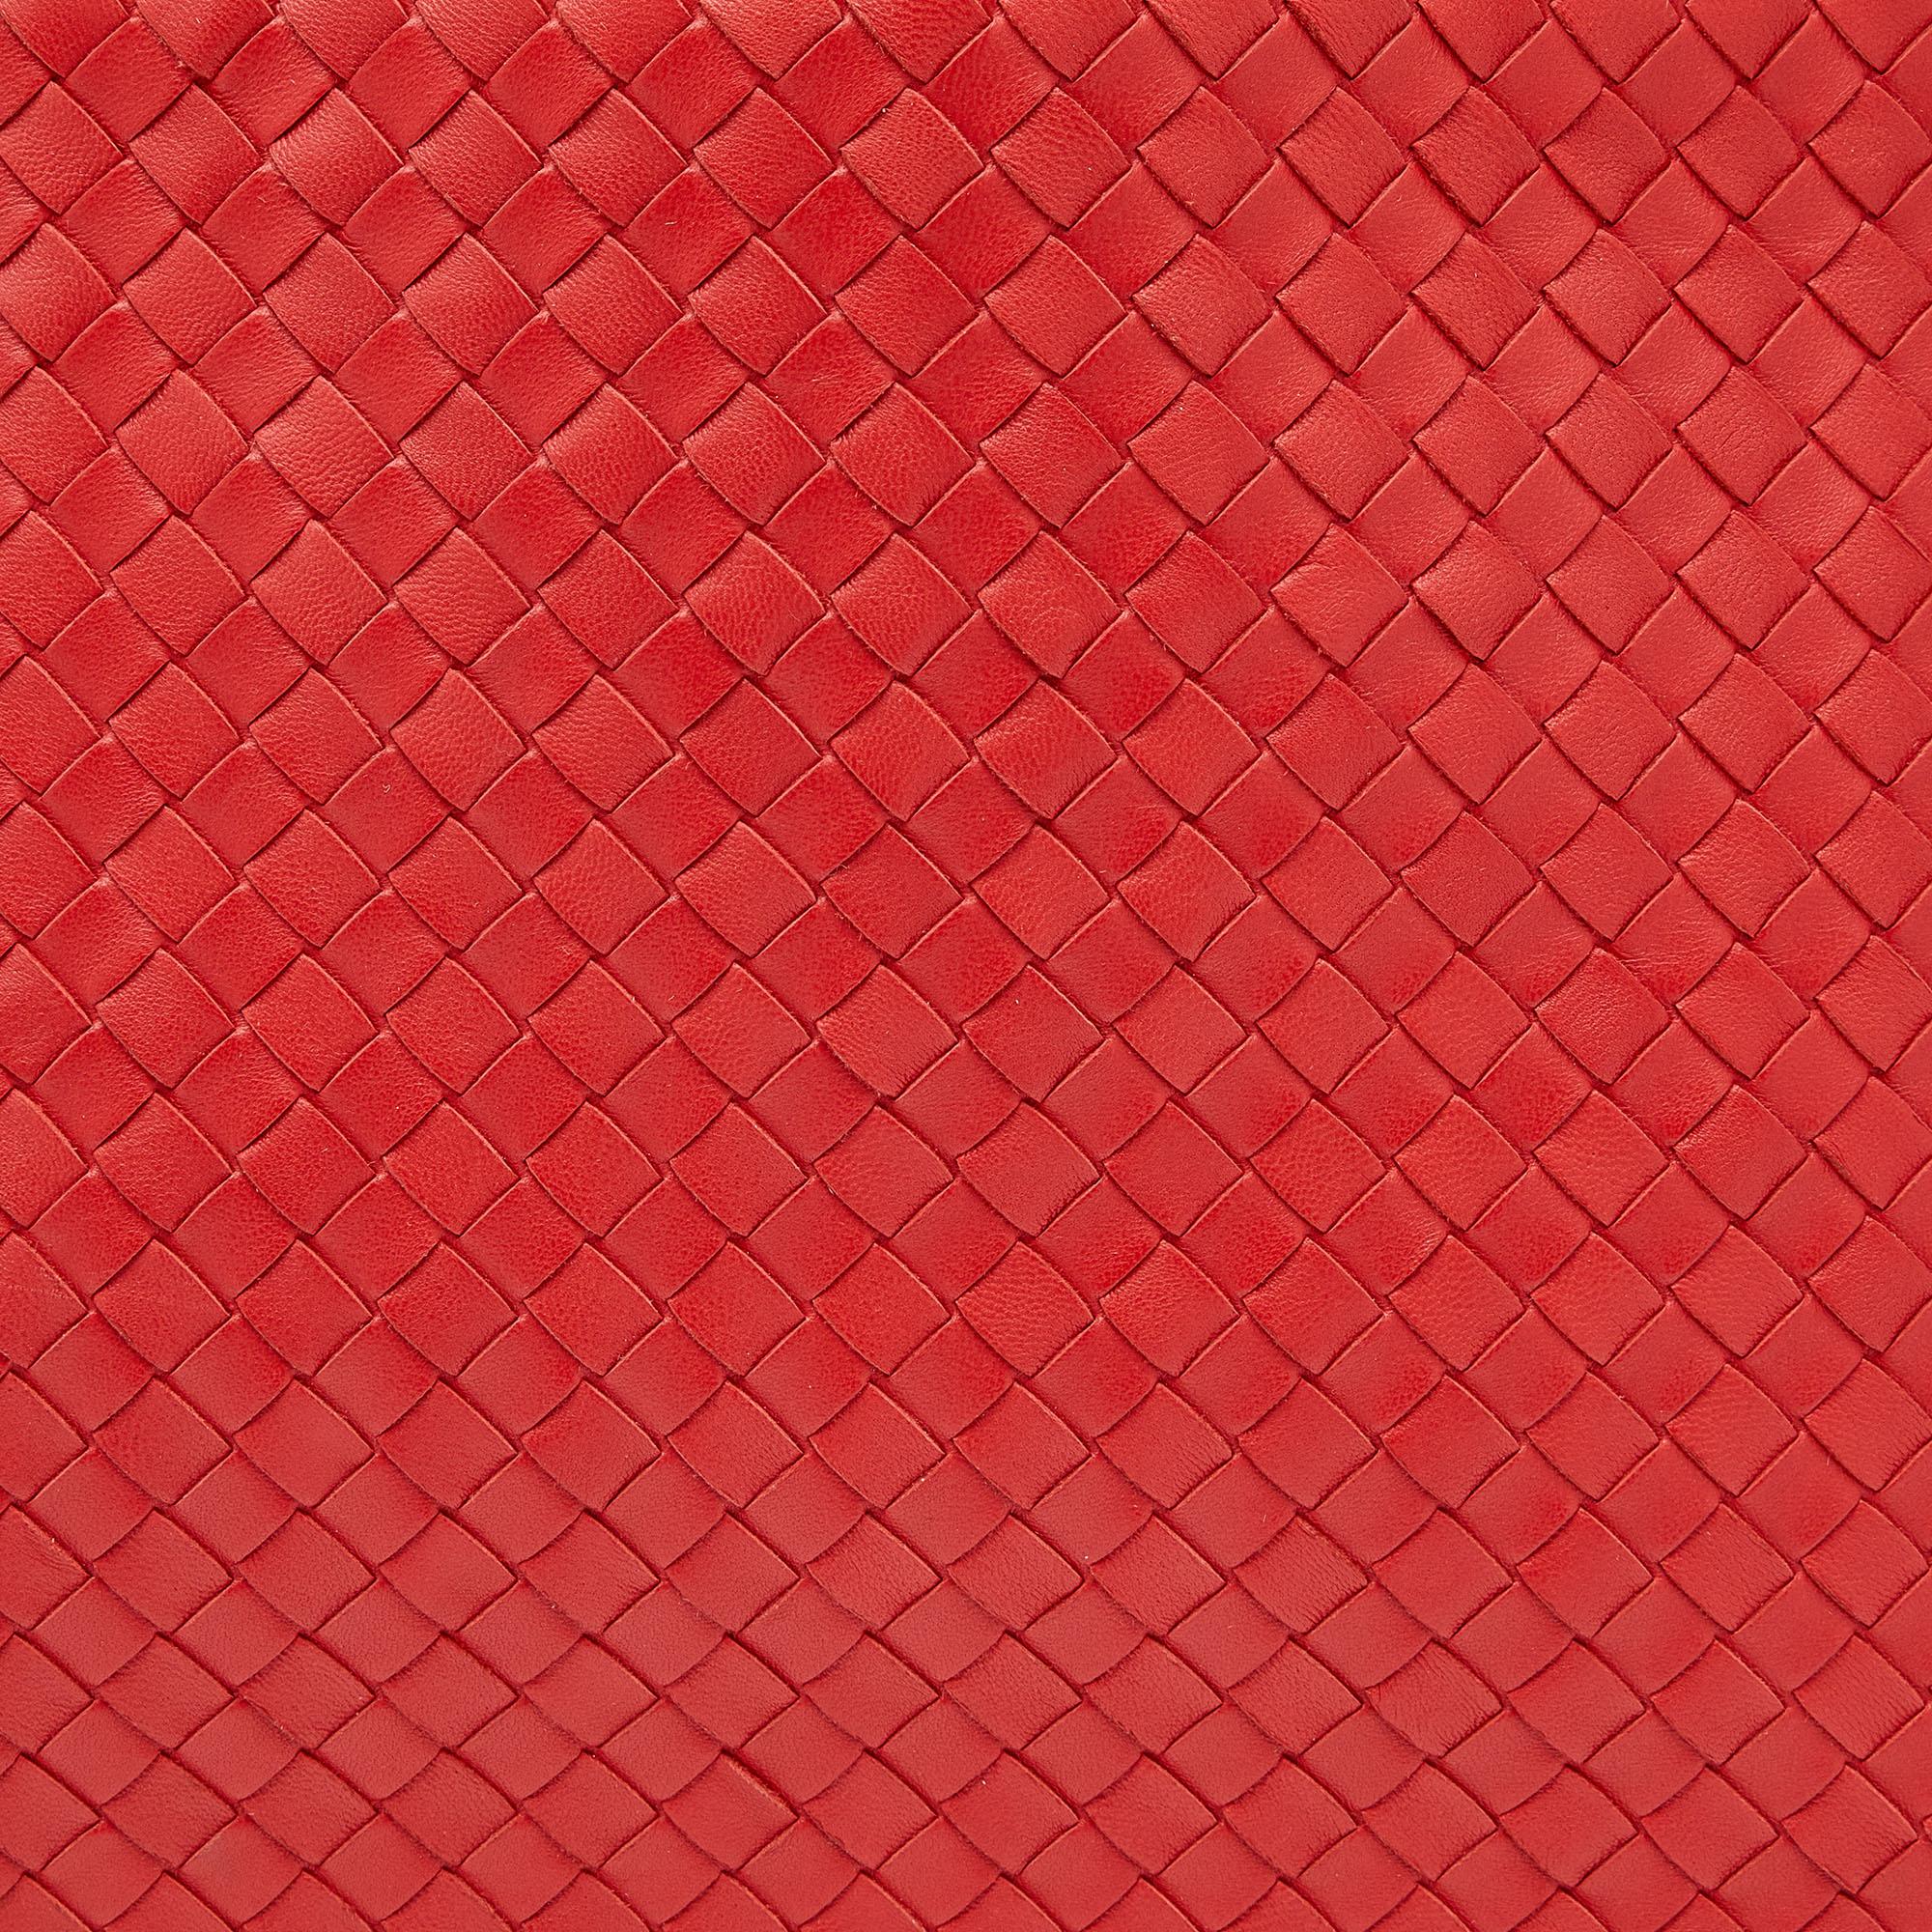 Bottega Veneta Red Intrecciato Leather Tote 3